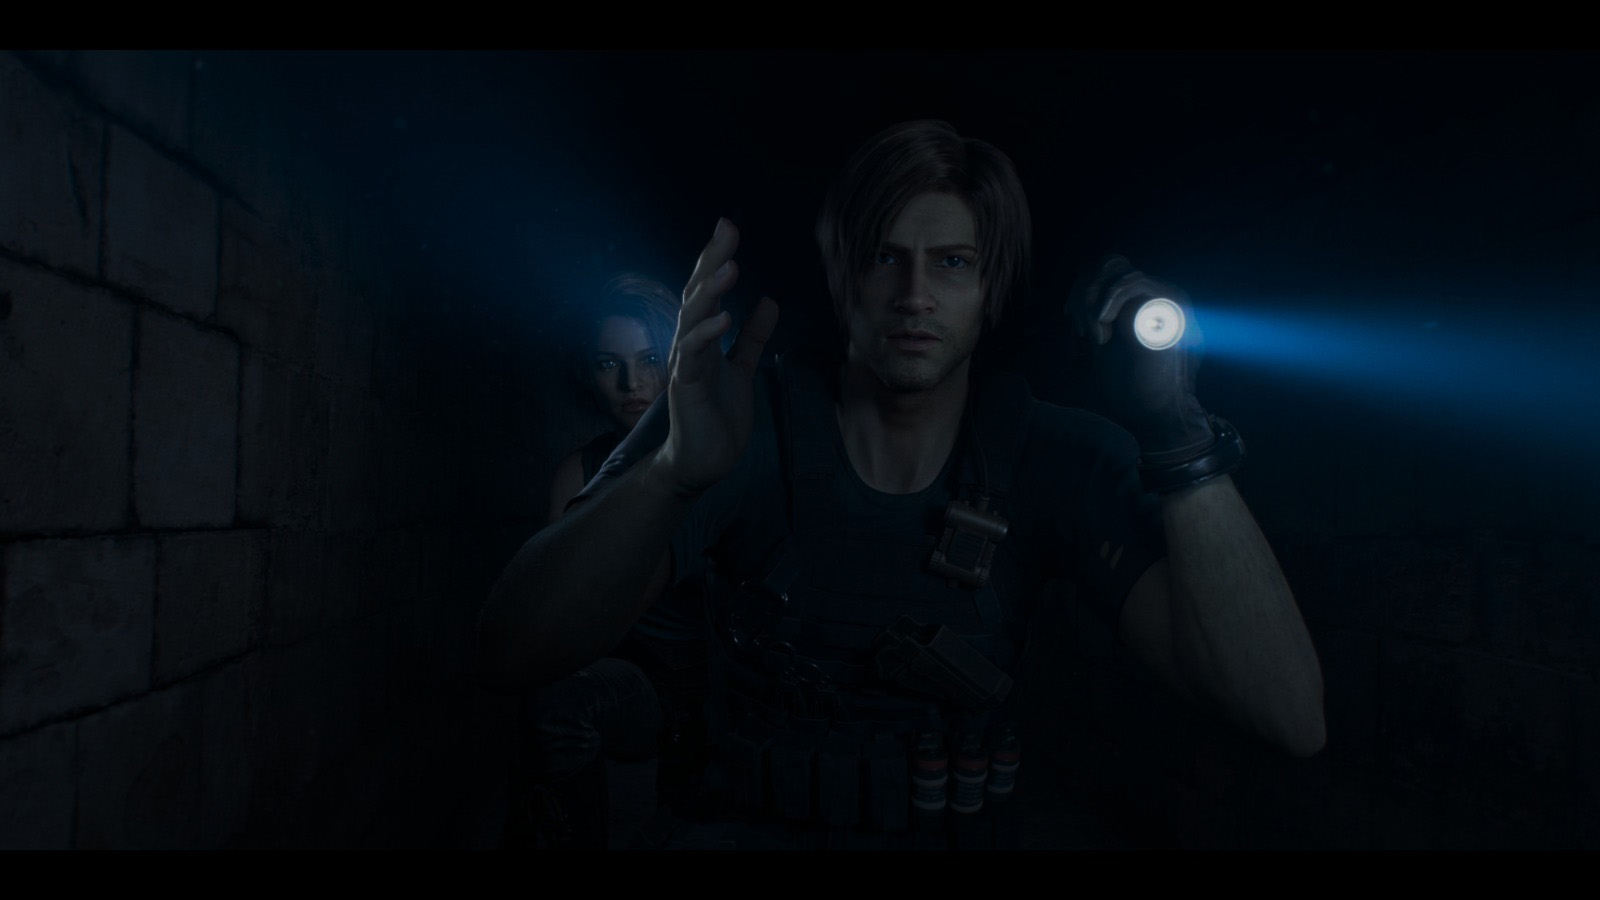 Filme Resident Evil: Death Island (Ilha da Morte) já está